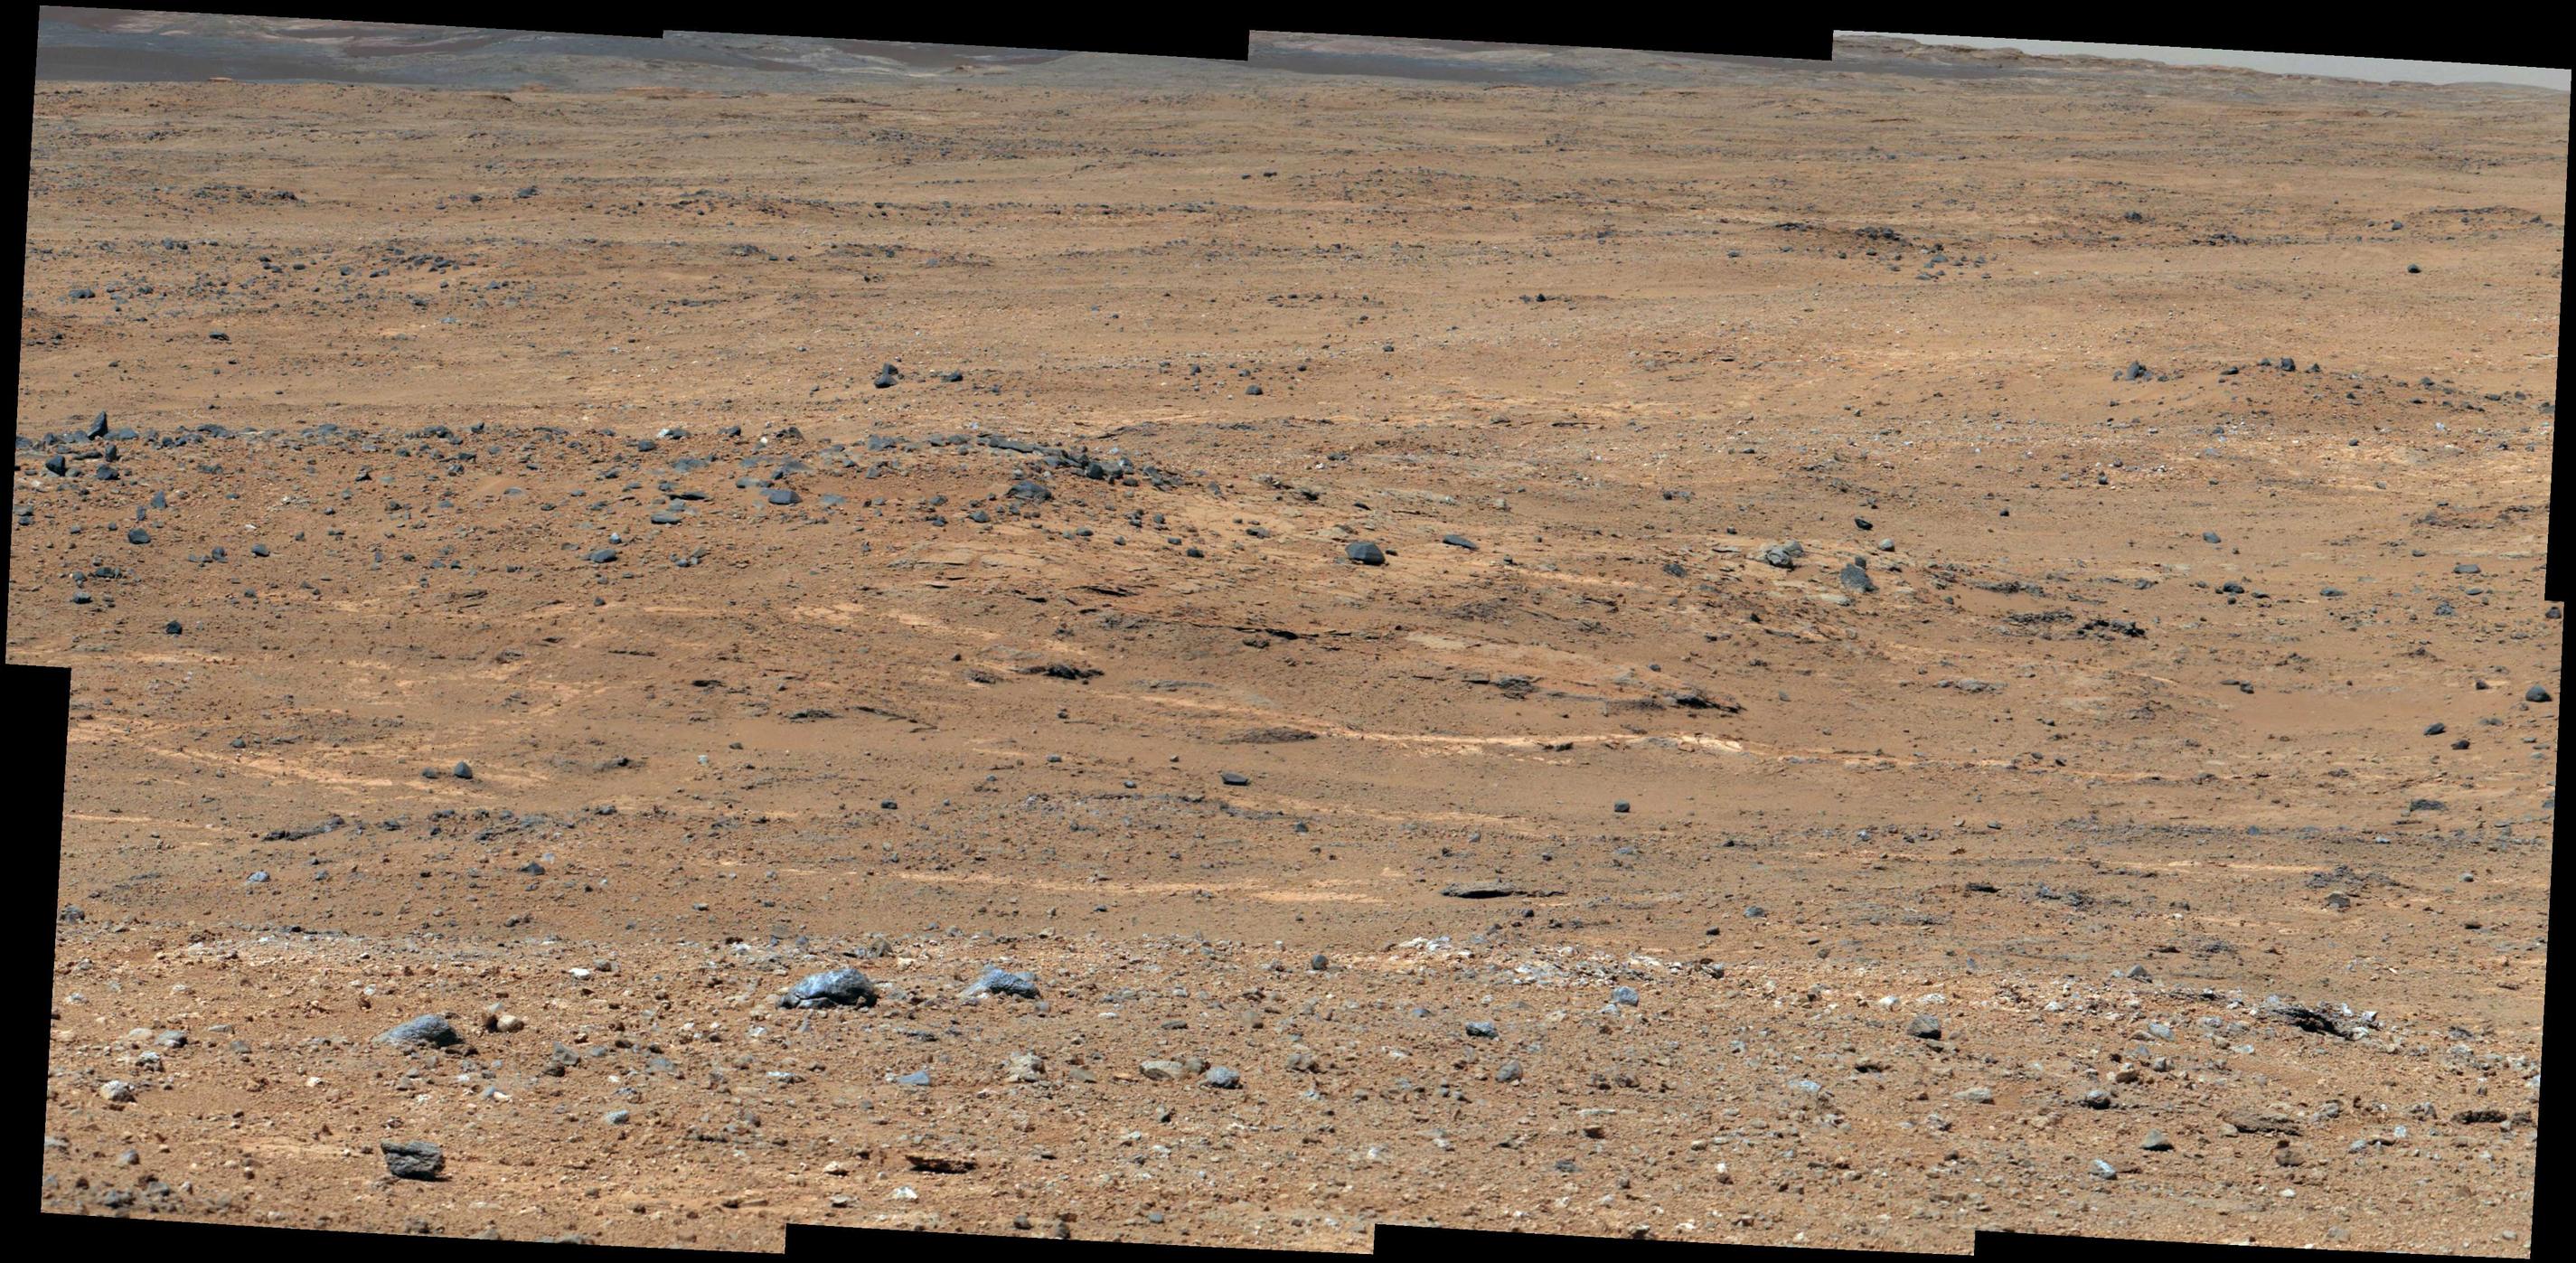 'Darwin' Outcrop at 'Waypoint 1' of Curiosity's trek to Mount Sharp